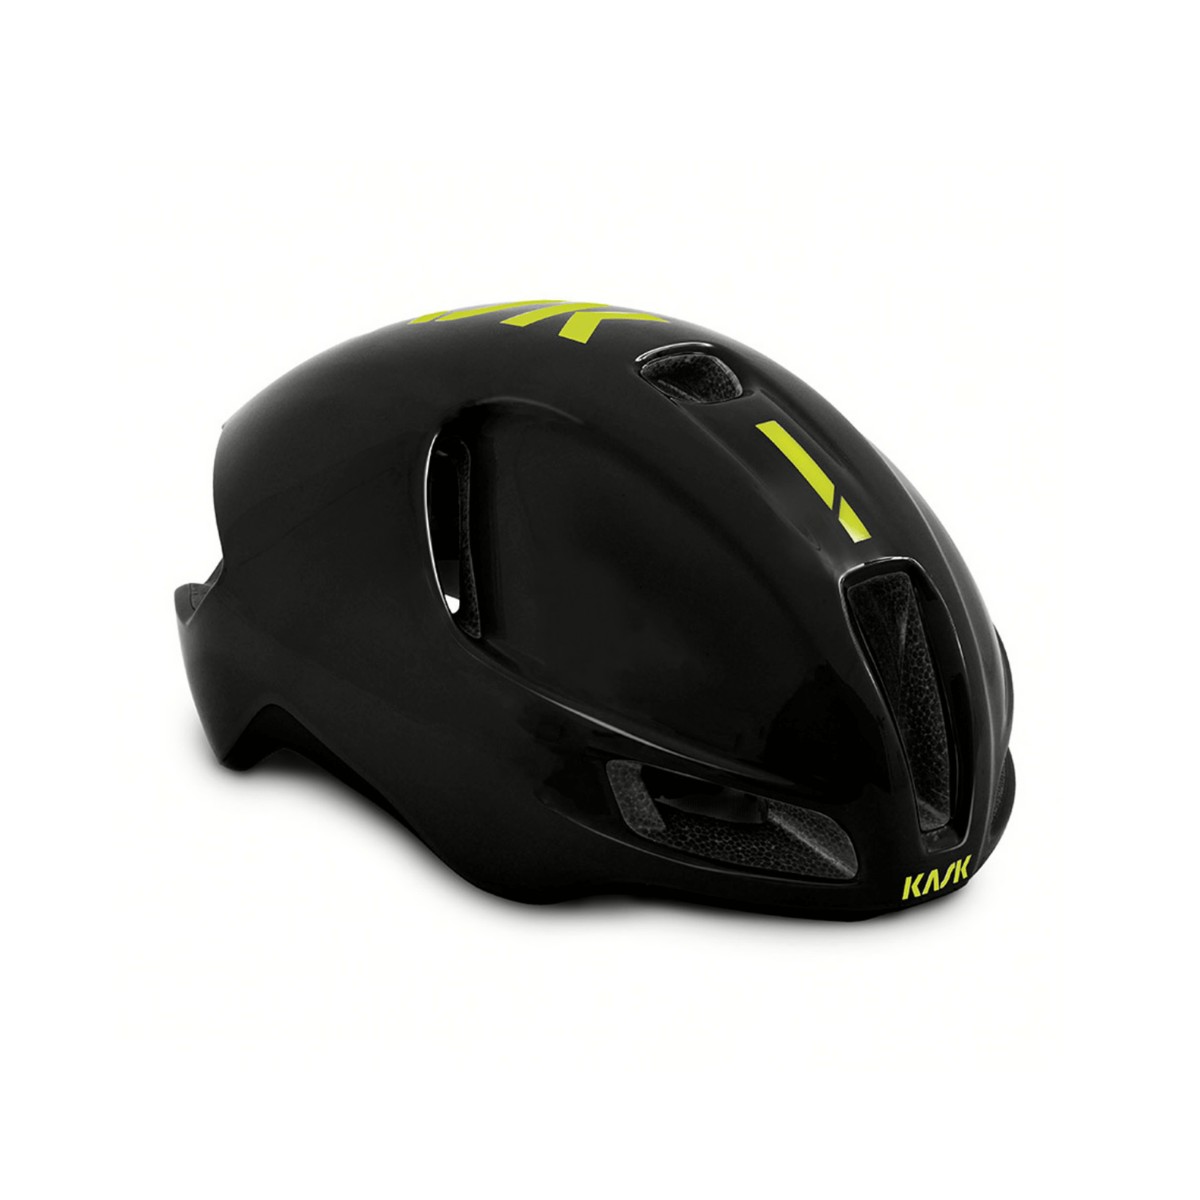 Kask Utopia Helmet Black Yellow Fluor, Size M: 52-58